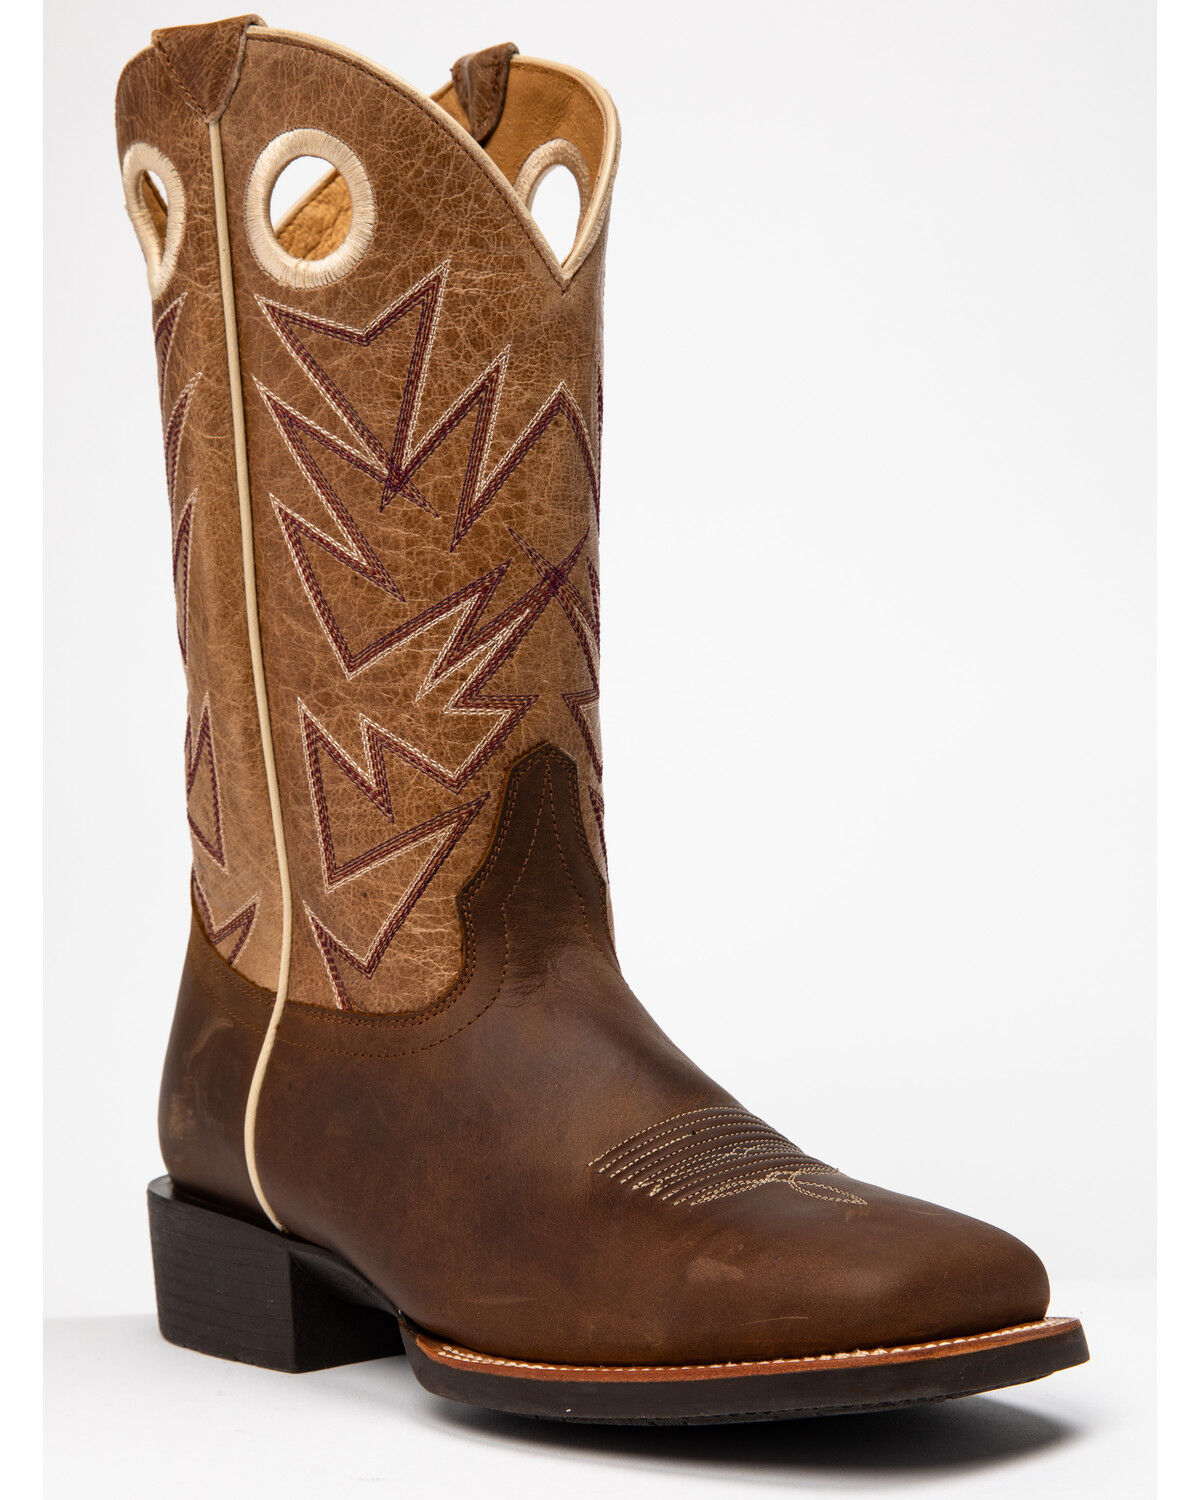 black friday deals on cowboy boots